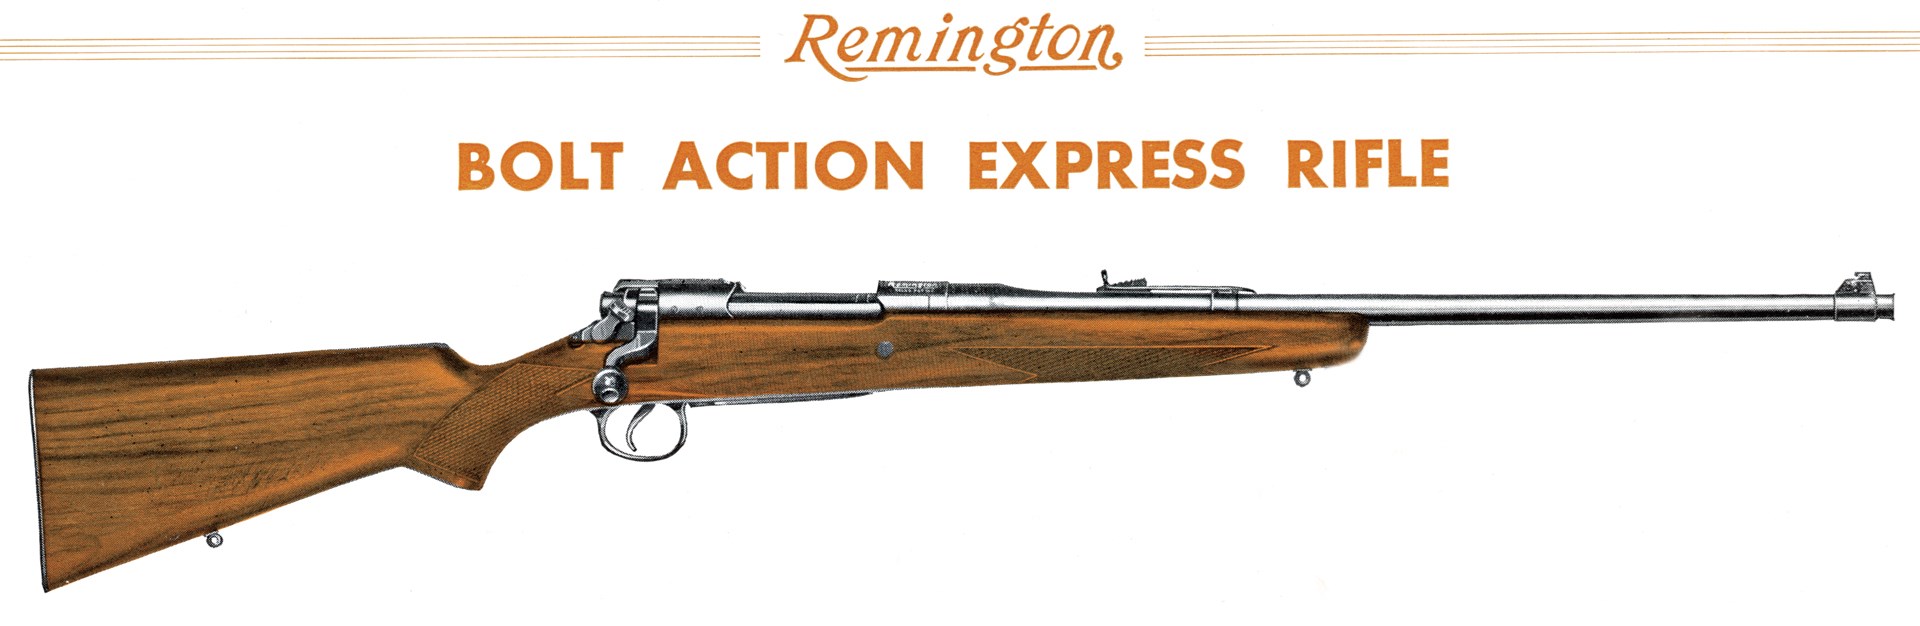 remington bolt action express rifle